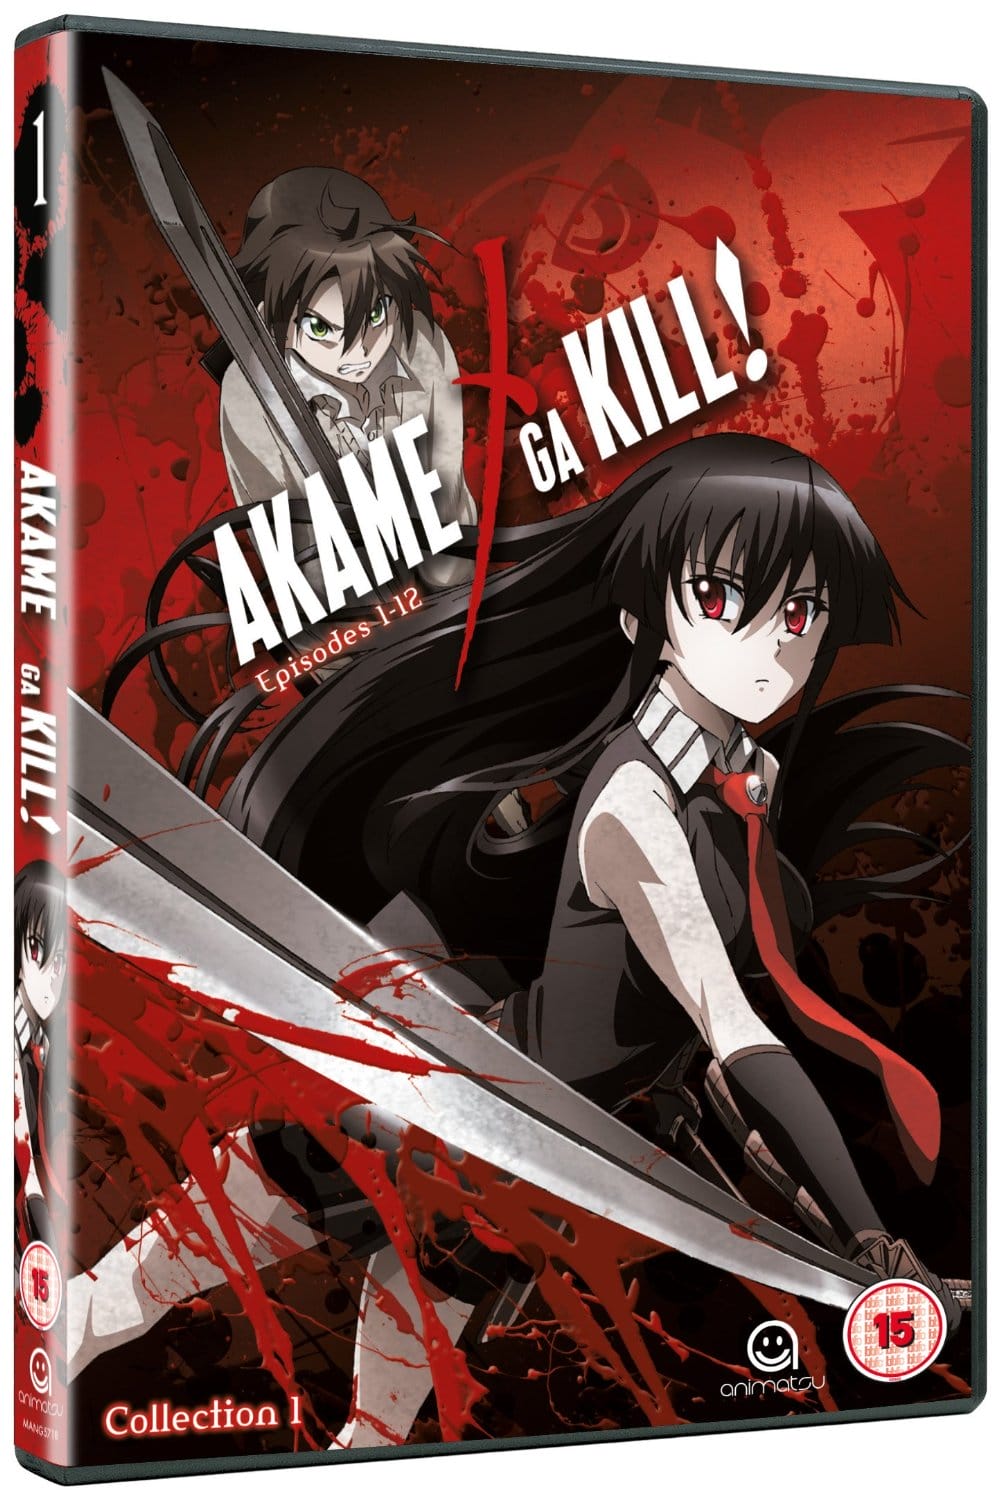 Akame Ga Kill! A Review